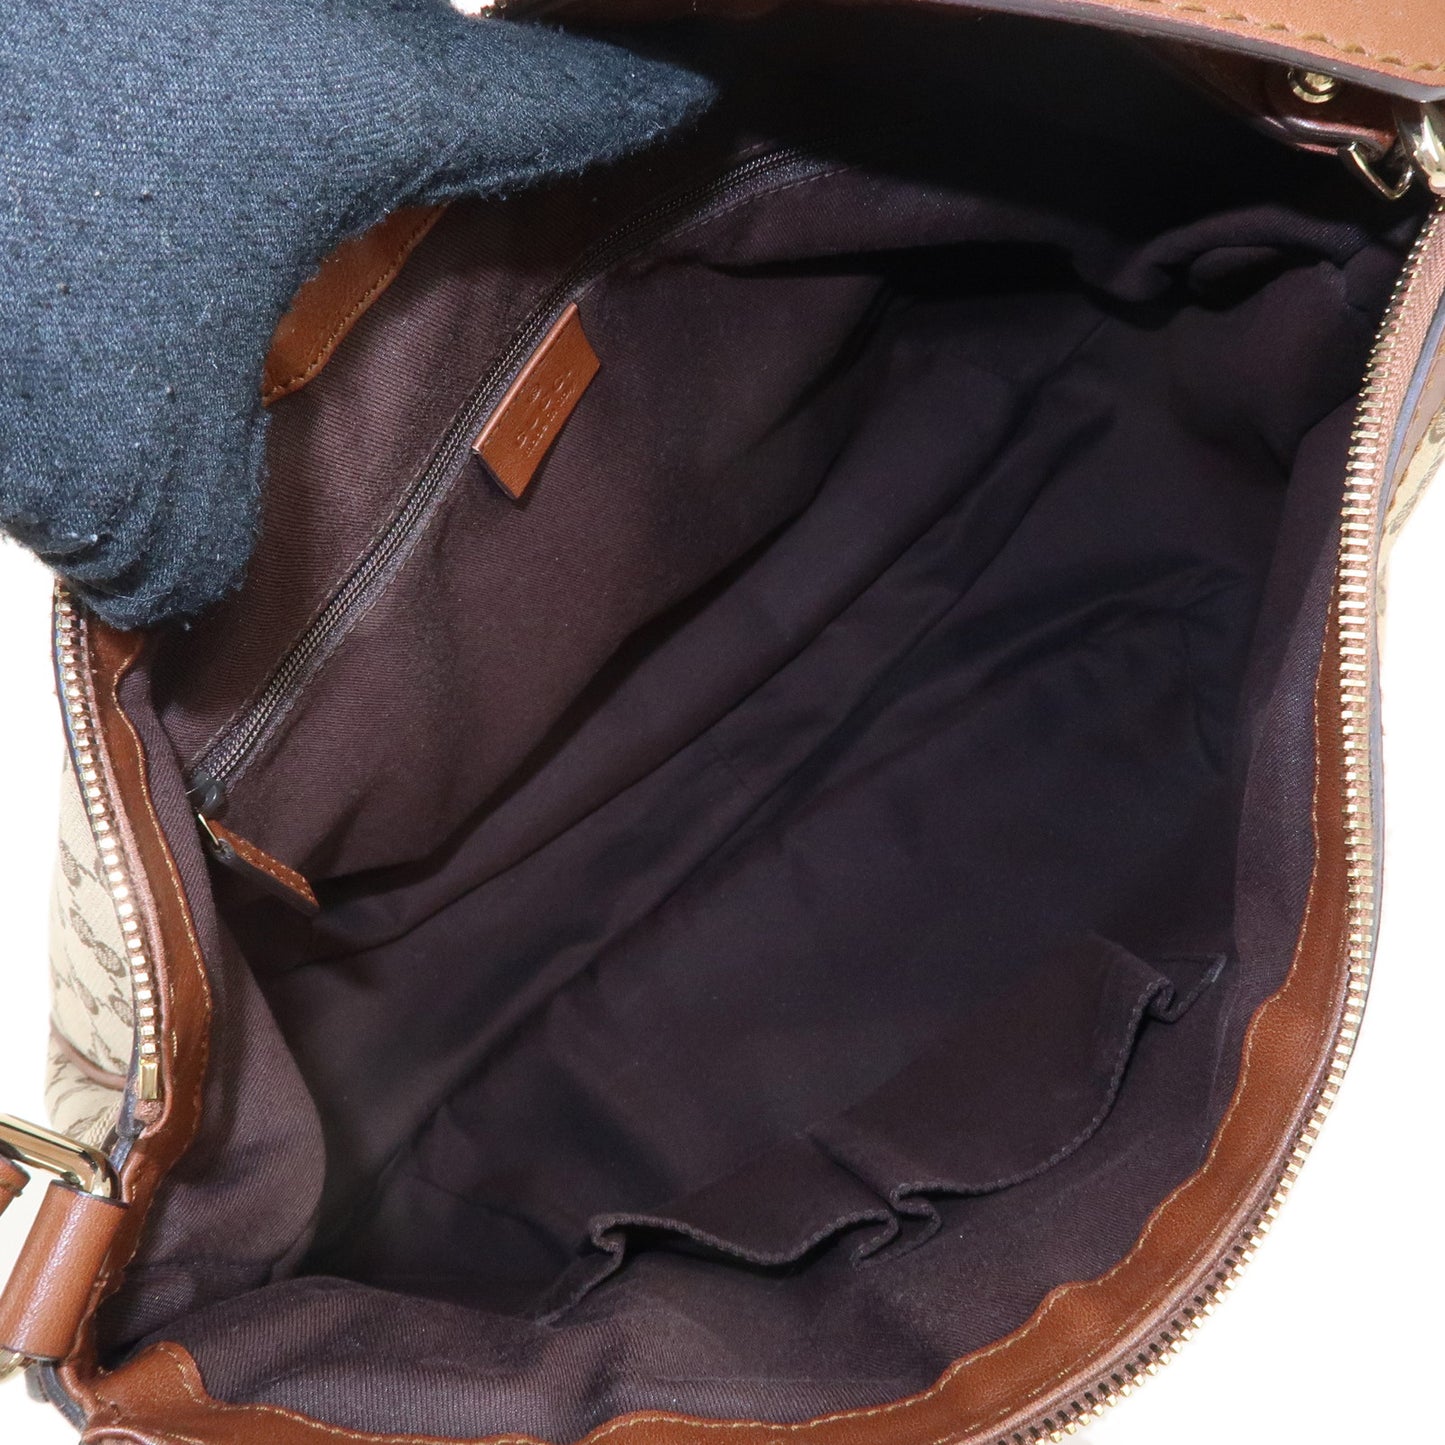 GUCCI Sukey GG Canvas Leather Shoulder Bag Beige Brown 232955